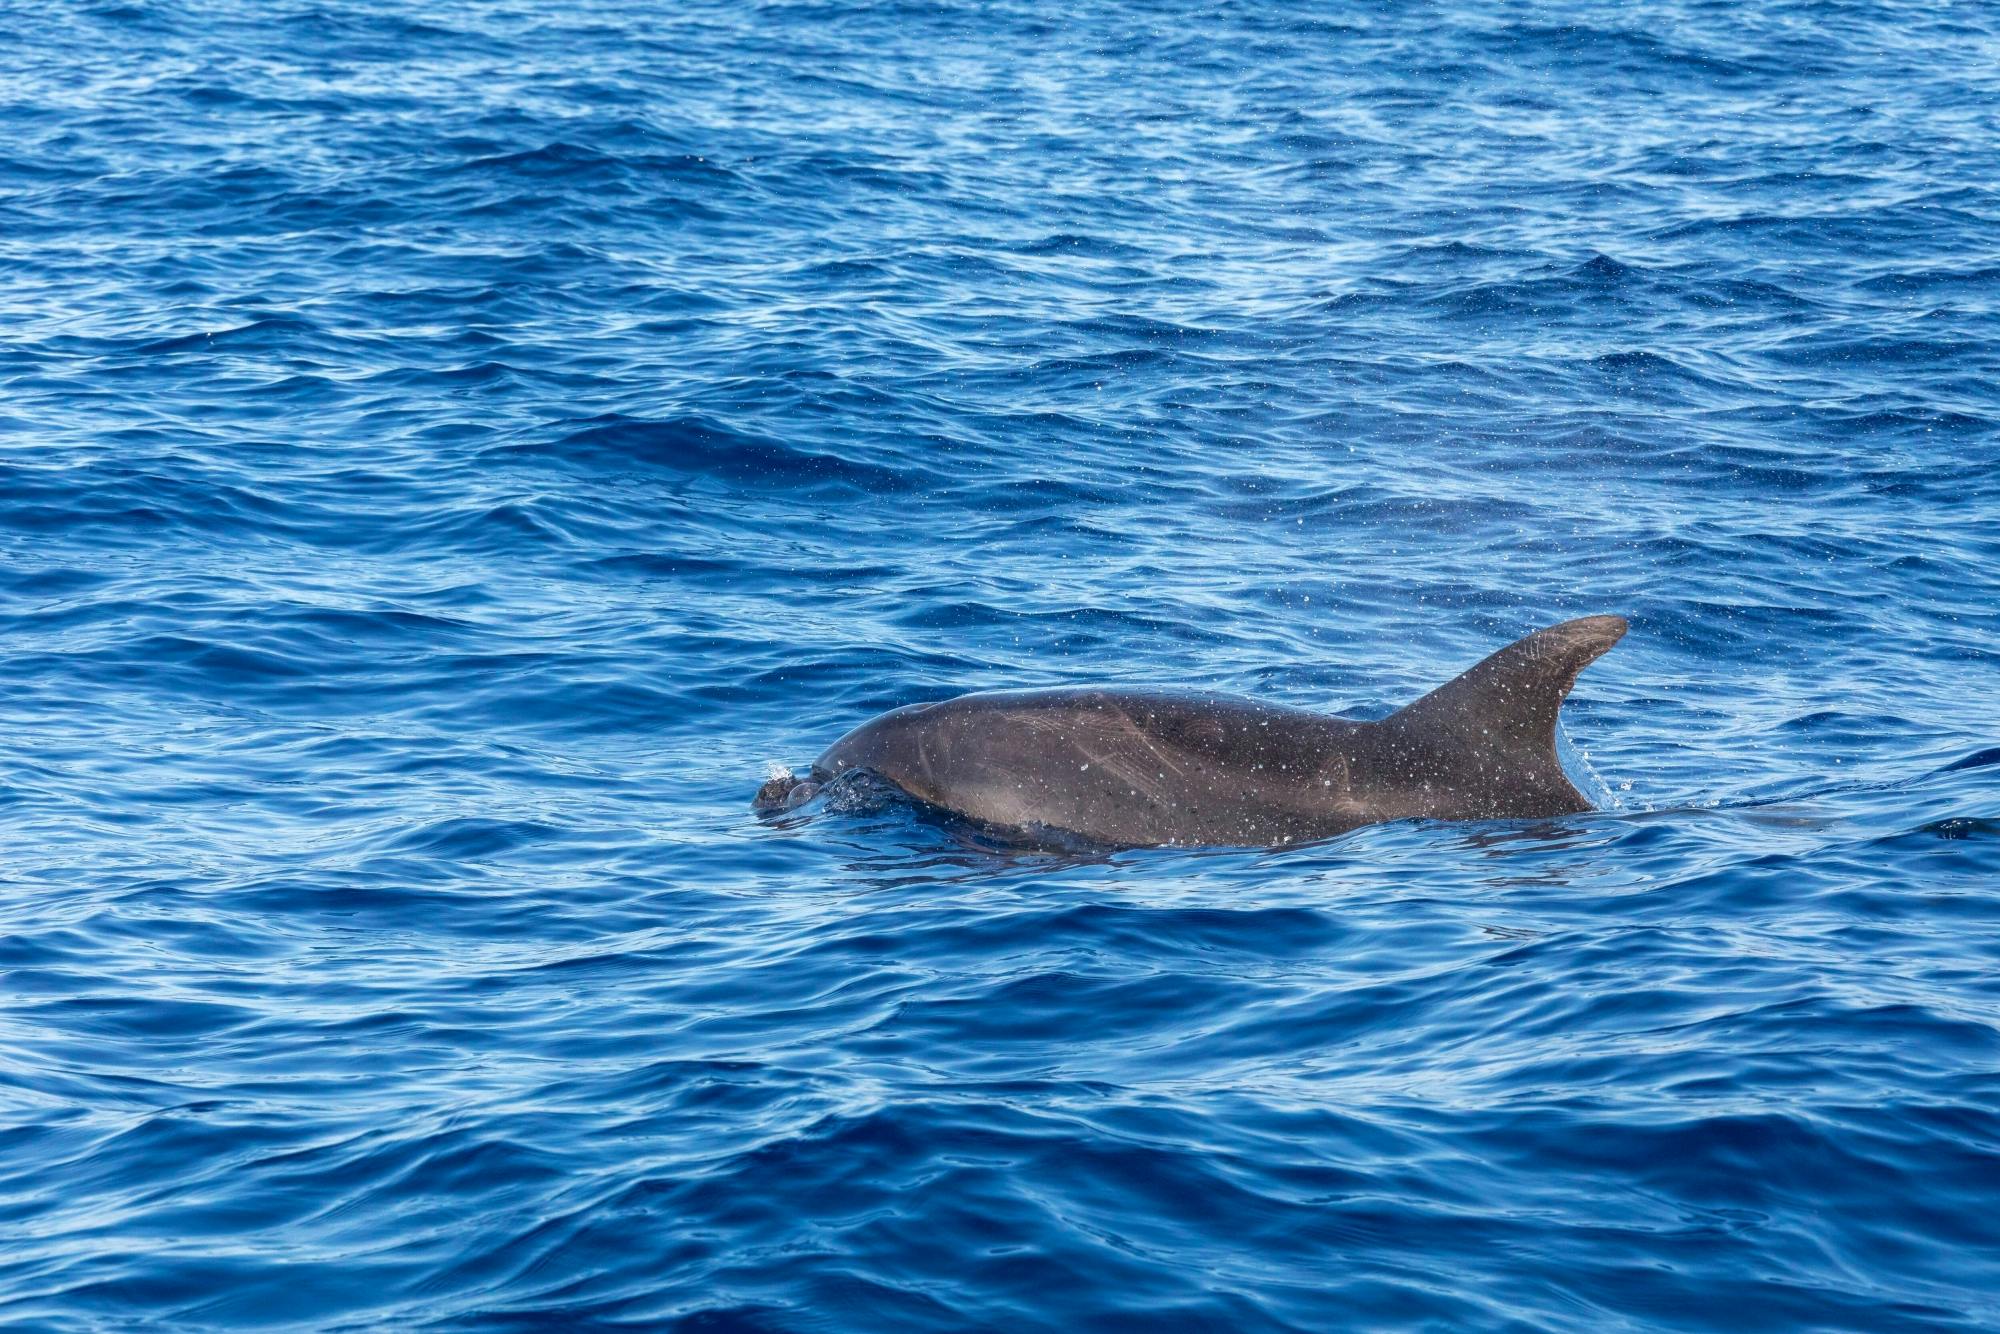 Bootsfahrt zur Delfinbeobachtung